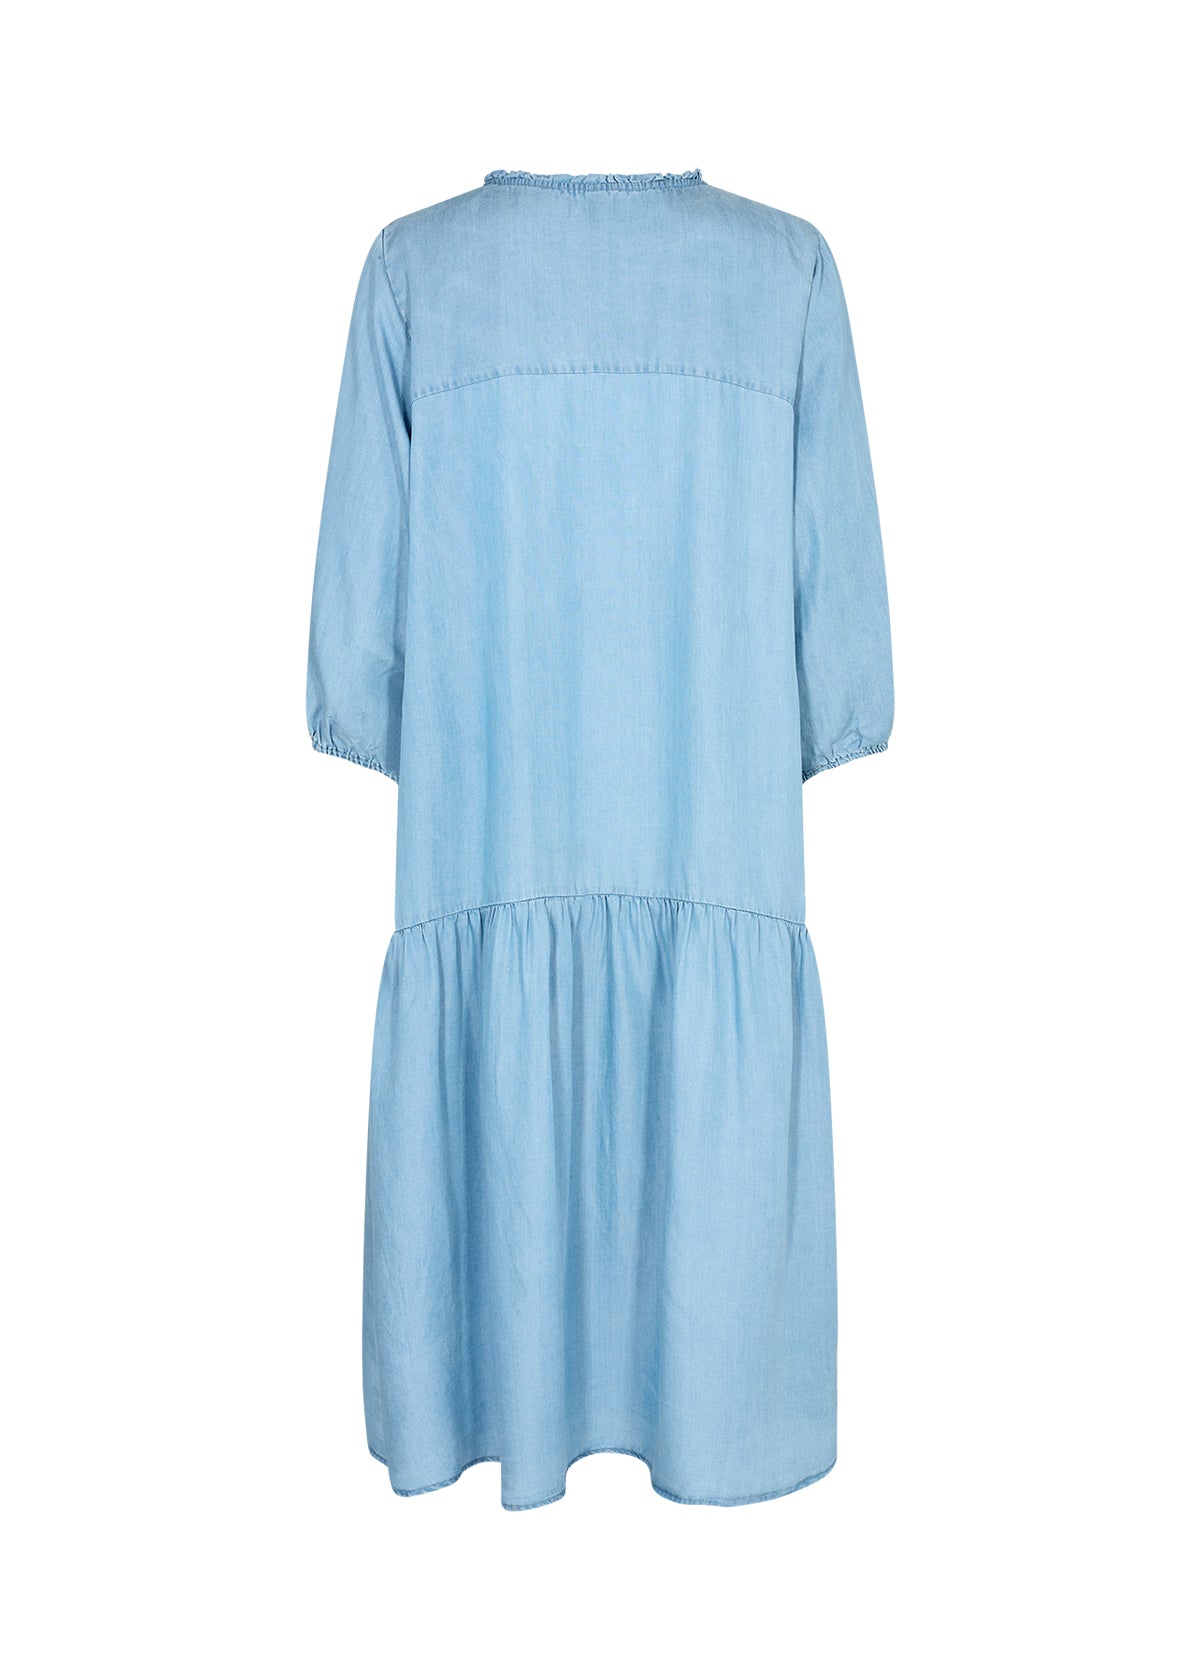 LIV Dress in Light Denim Blue